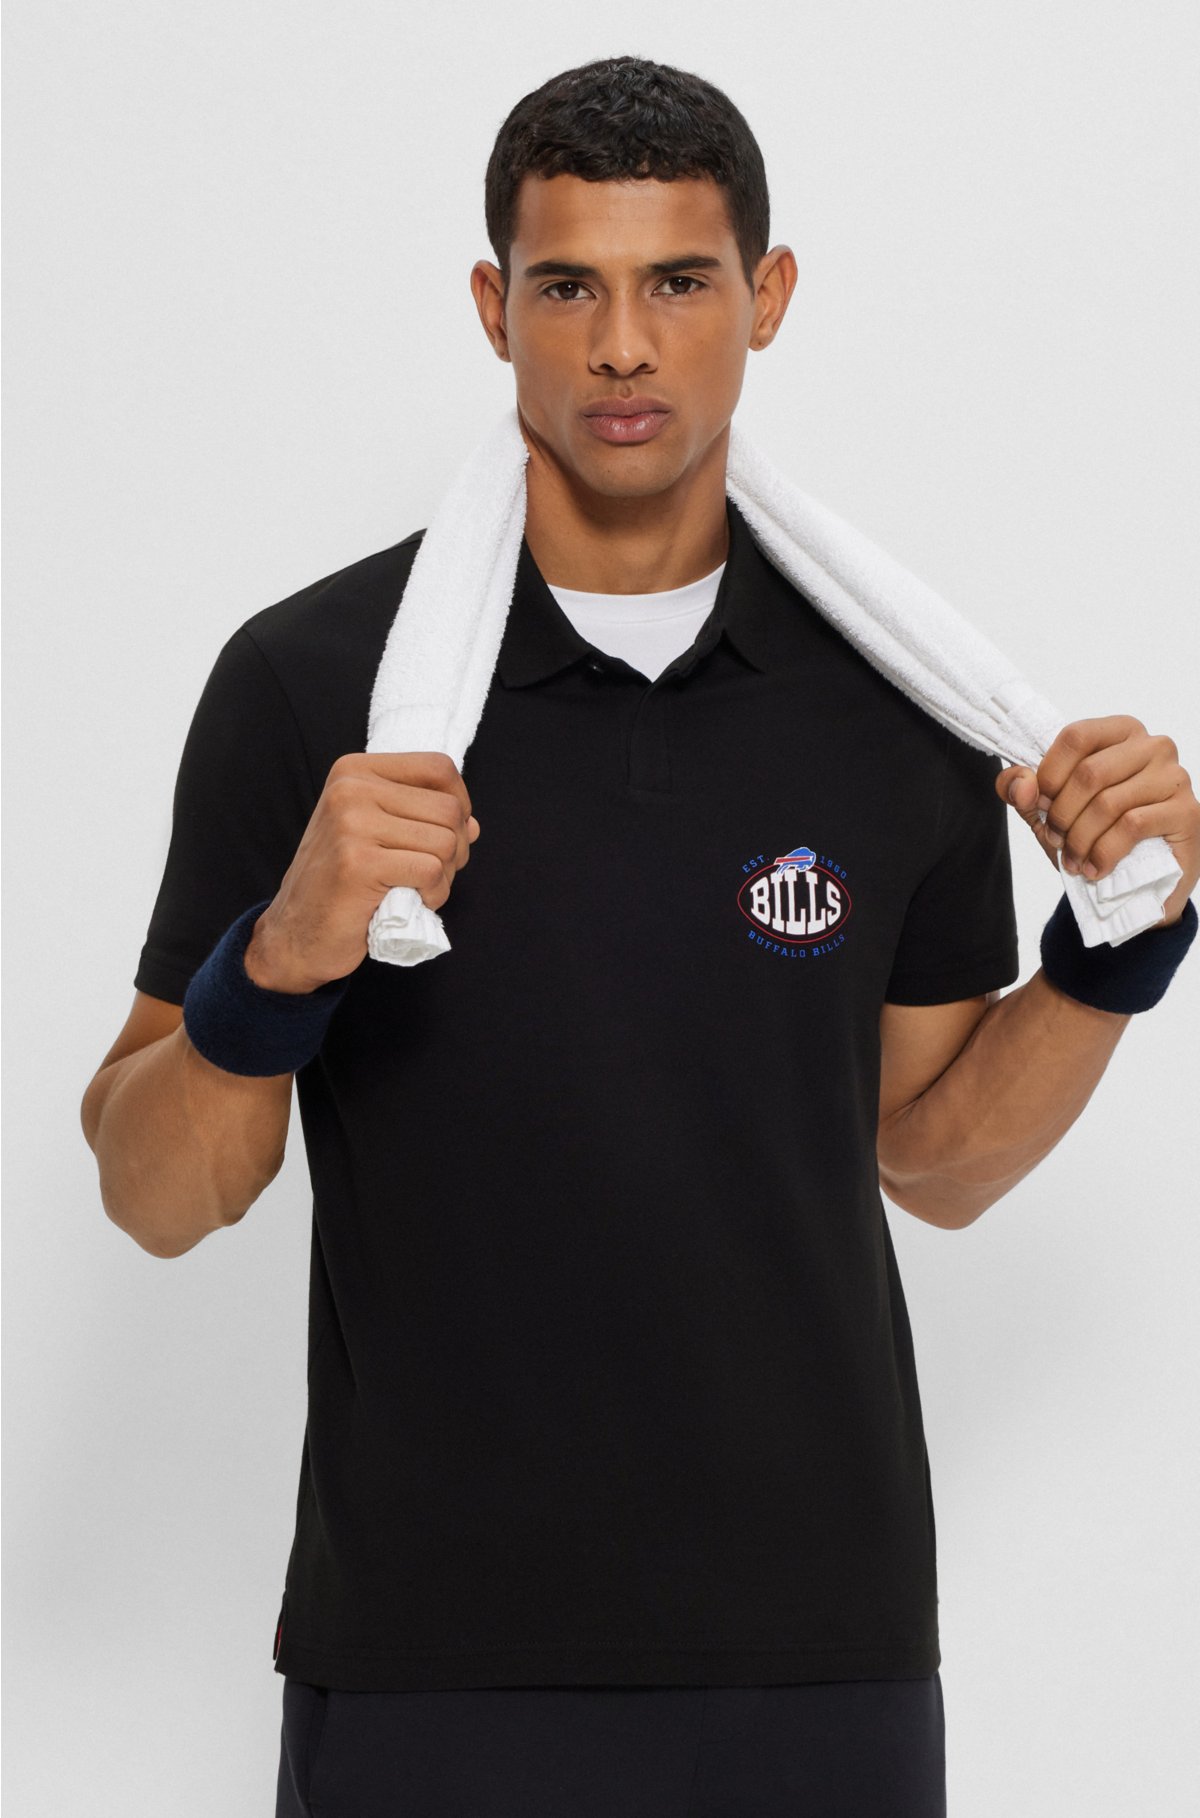 BOSS x NFL cotton-piqué polo shirt with collaborative branding, Bills